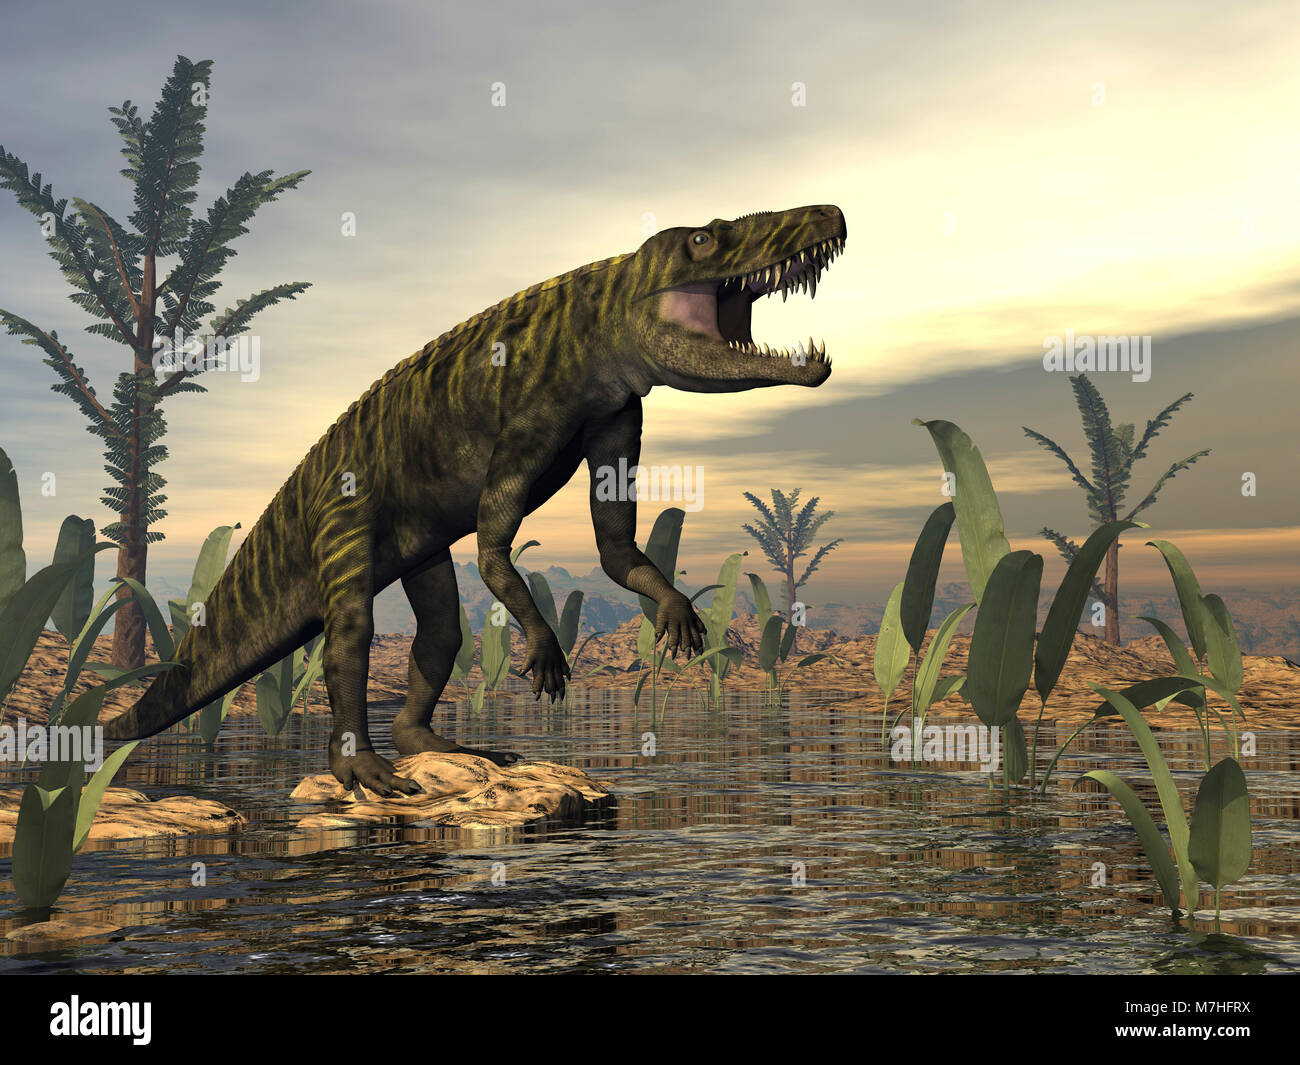 Batrachotomus dinosaur roaring by a swamp. Stock Photo